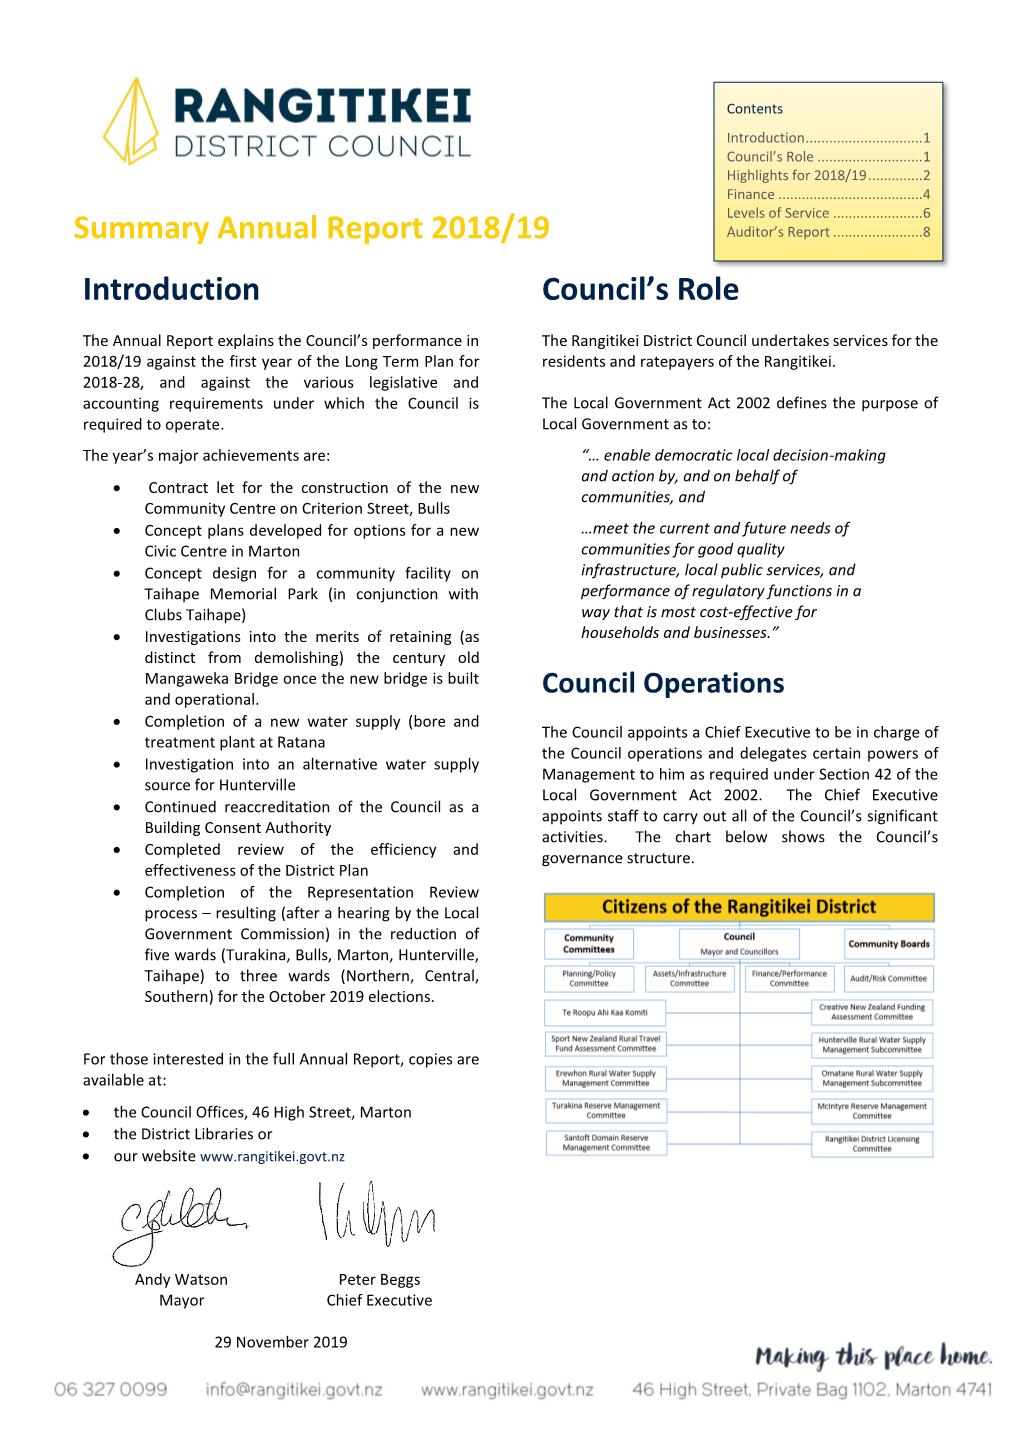 Summary Annual Report 2018-2019